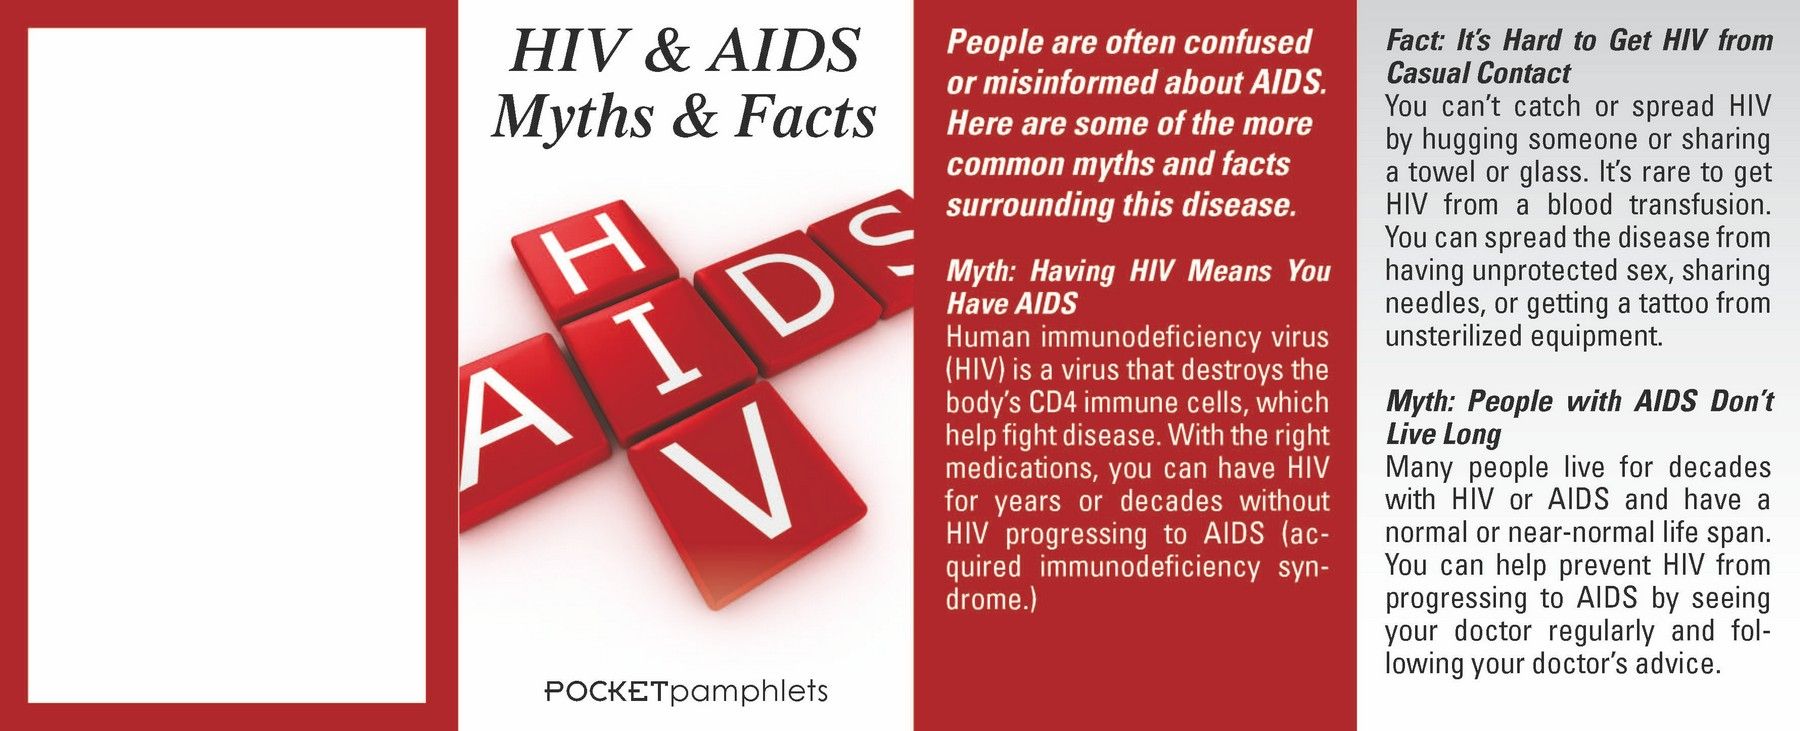 Эрондондон аслан спид ап. About AIDS. HIV AIDS. Myths about HIV and AIDS. Pamphlet for HIV.